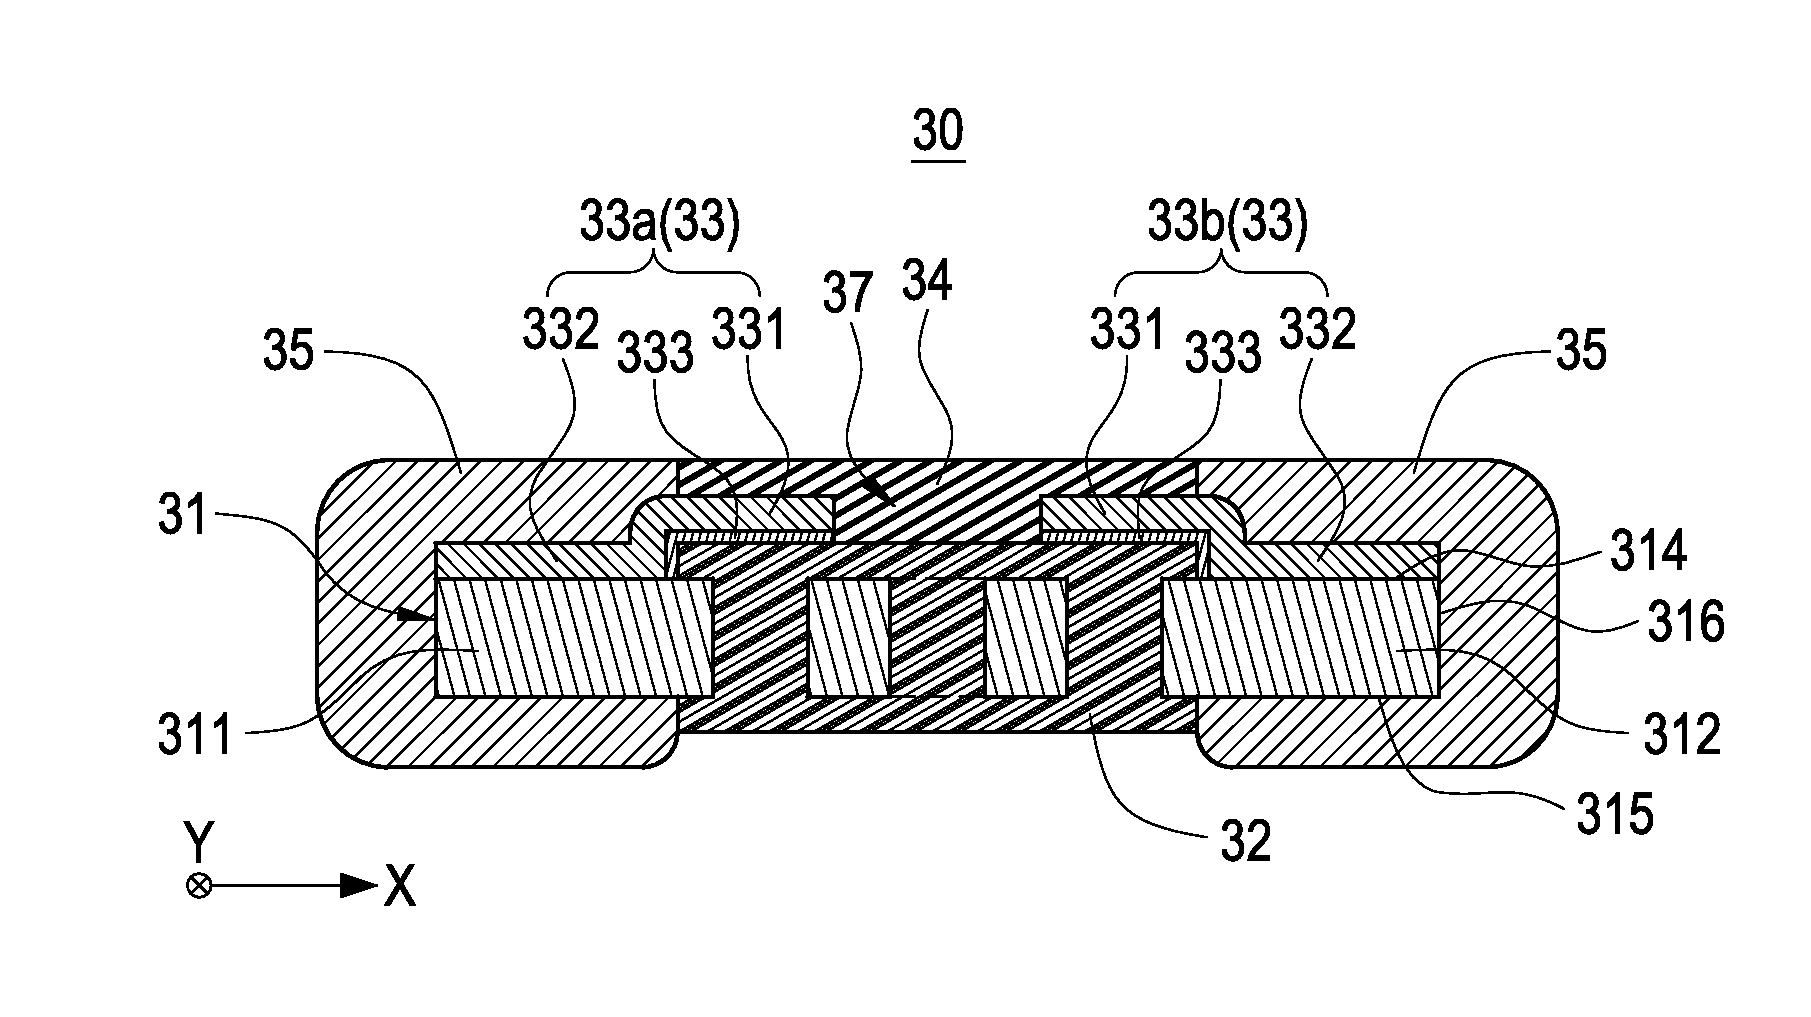 Surface mount resistor